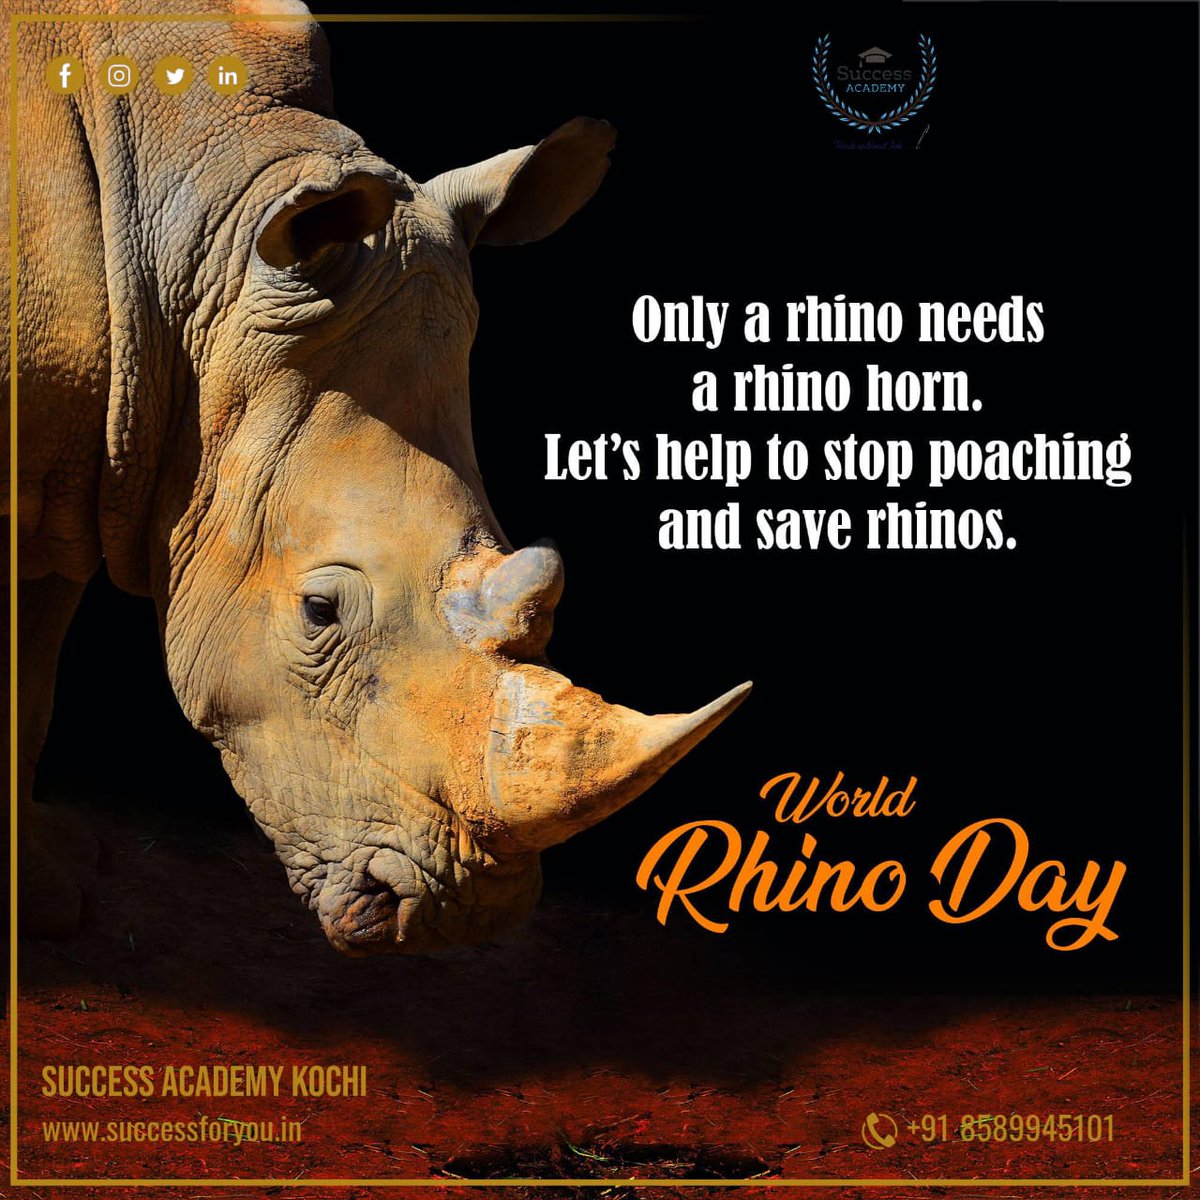 #WorldRhinoDay #SaveTheRhino #RhinoConservation #RhinoDay #ProtectTheRhino
#RhinoAwareness #StopRhinoPoaching #RhinosMatter #RhinoLove #WildlifeProtection
#EndangeredSpecies #ConservationEfforts #RhinoAdvocacy  #WildlifePreservation #SSCCoaching #BankCoaching #SuccessAcademyKochi